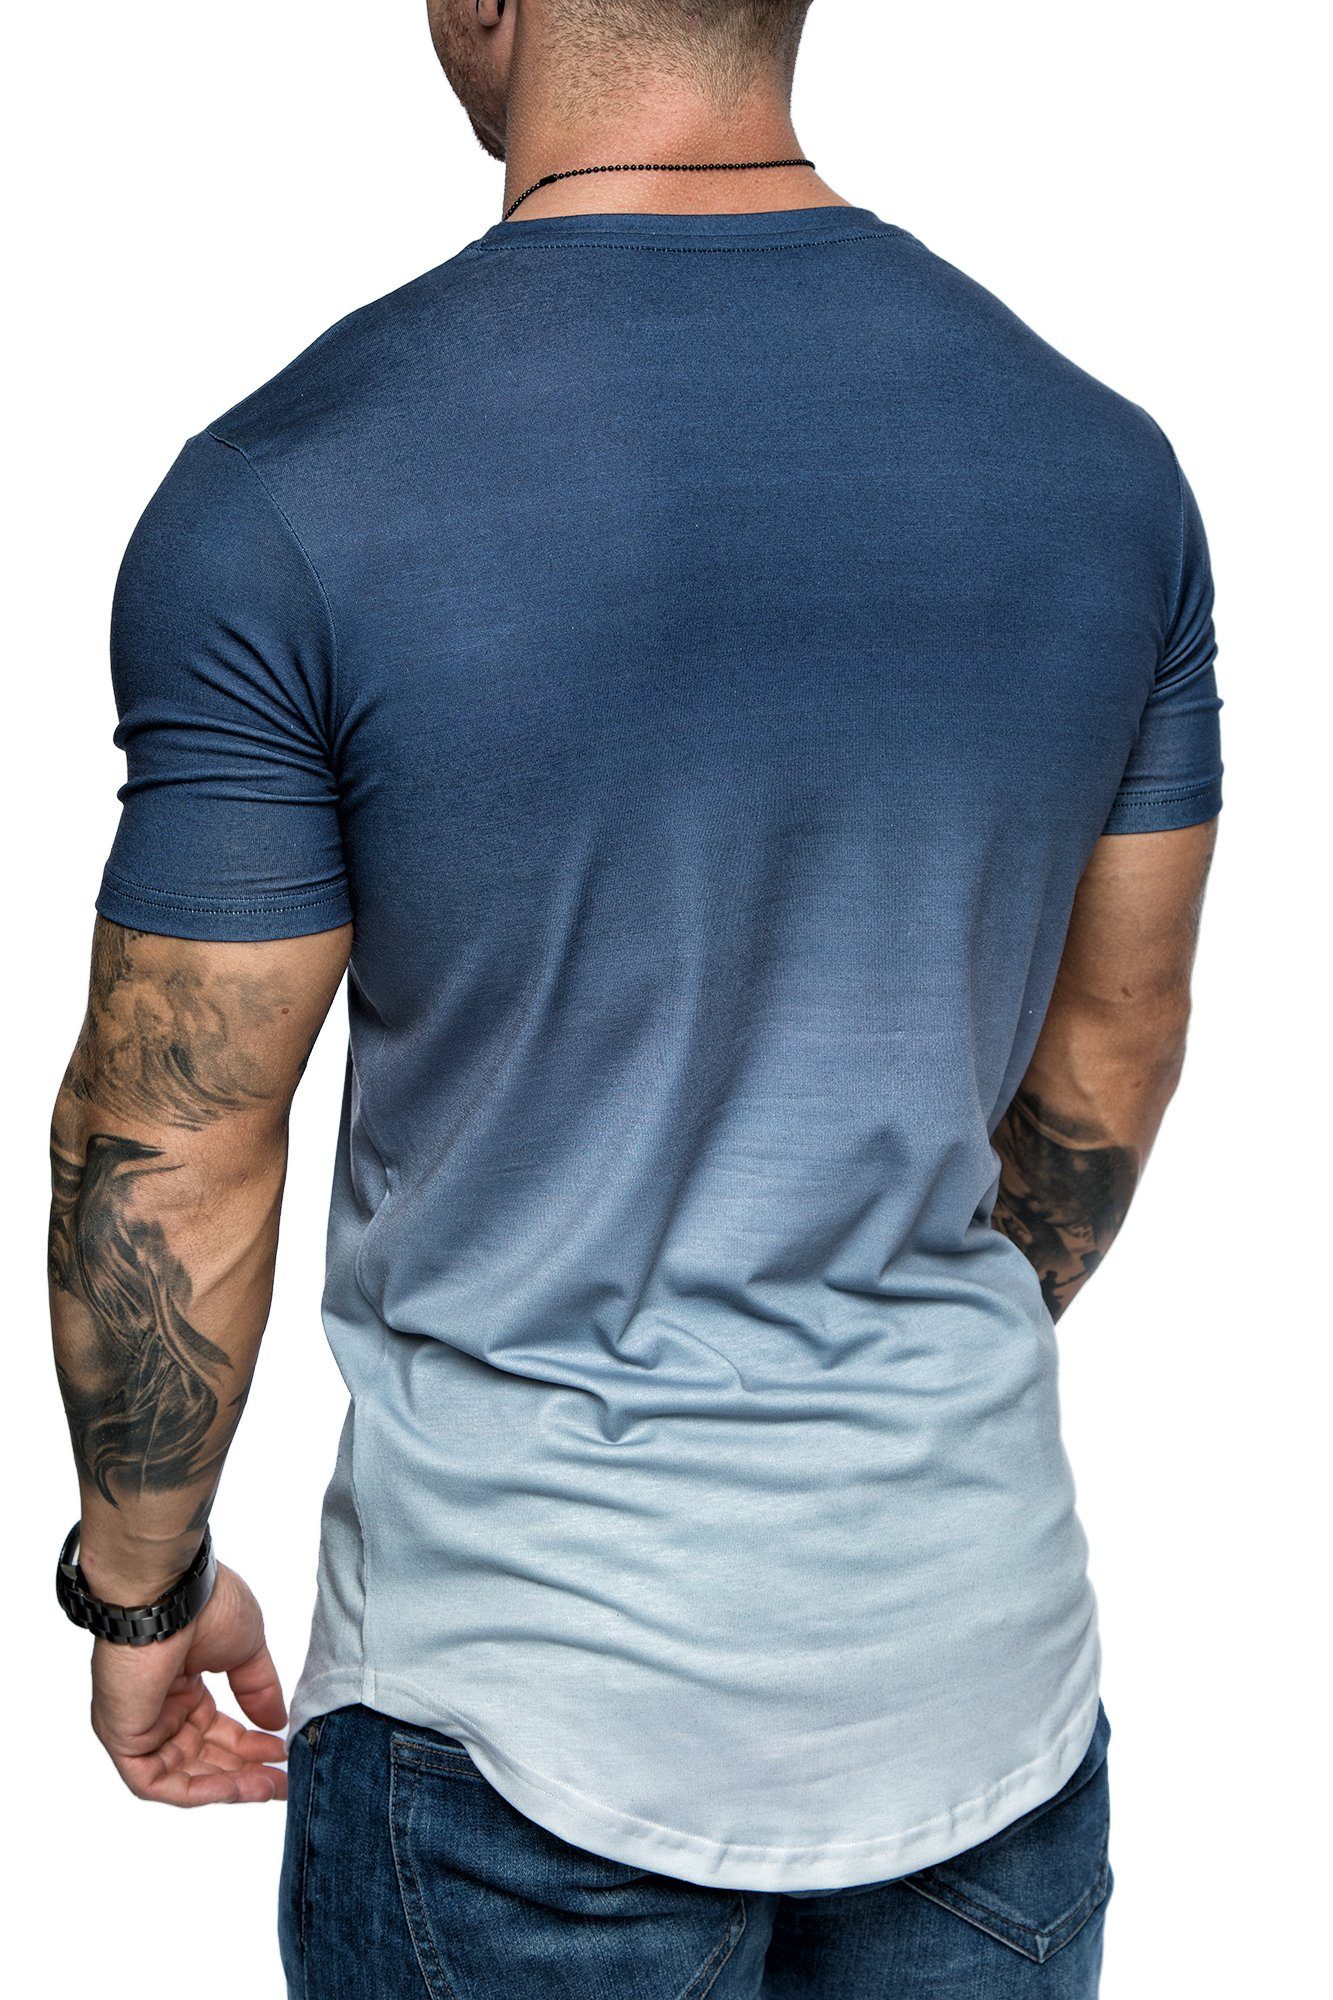 Design Crew Neck Waterfall mit Rundhalsausschnitt Navyblau/Weiß LIAM Herren T-Shirt REPUBLIX Shirt Oversize